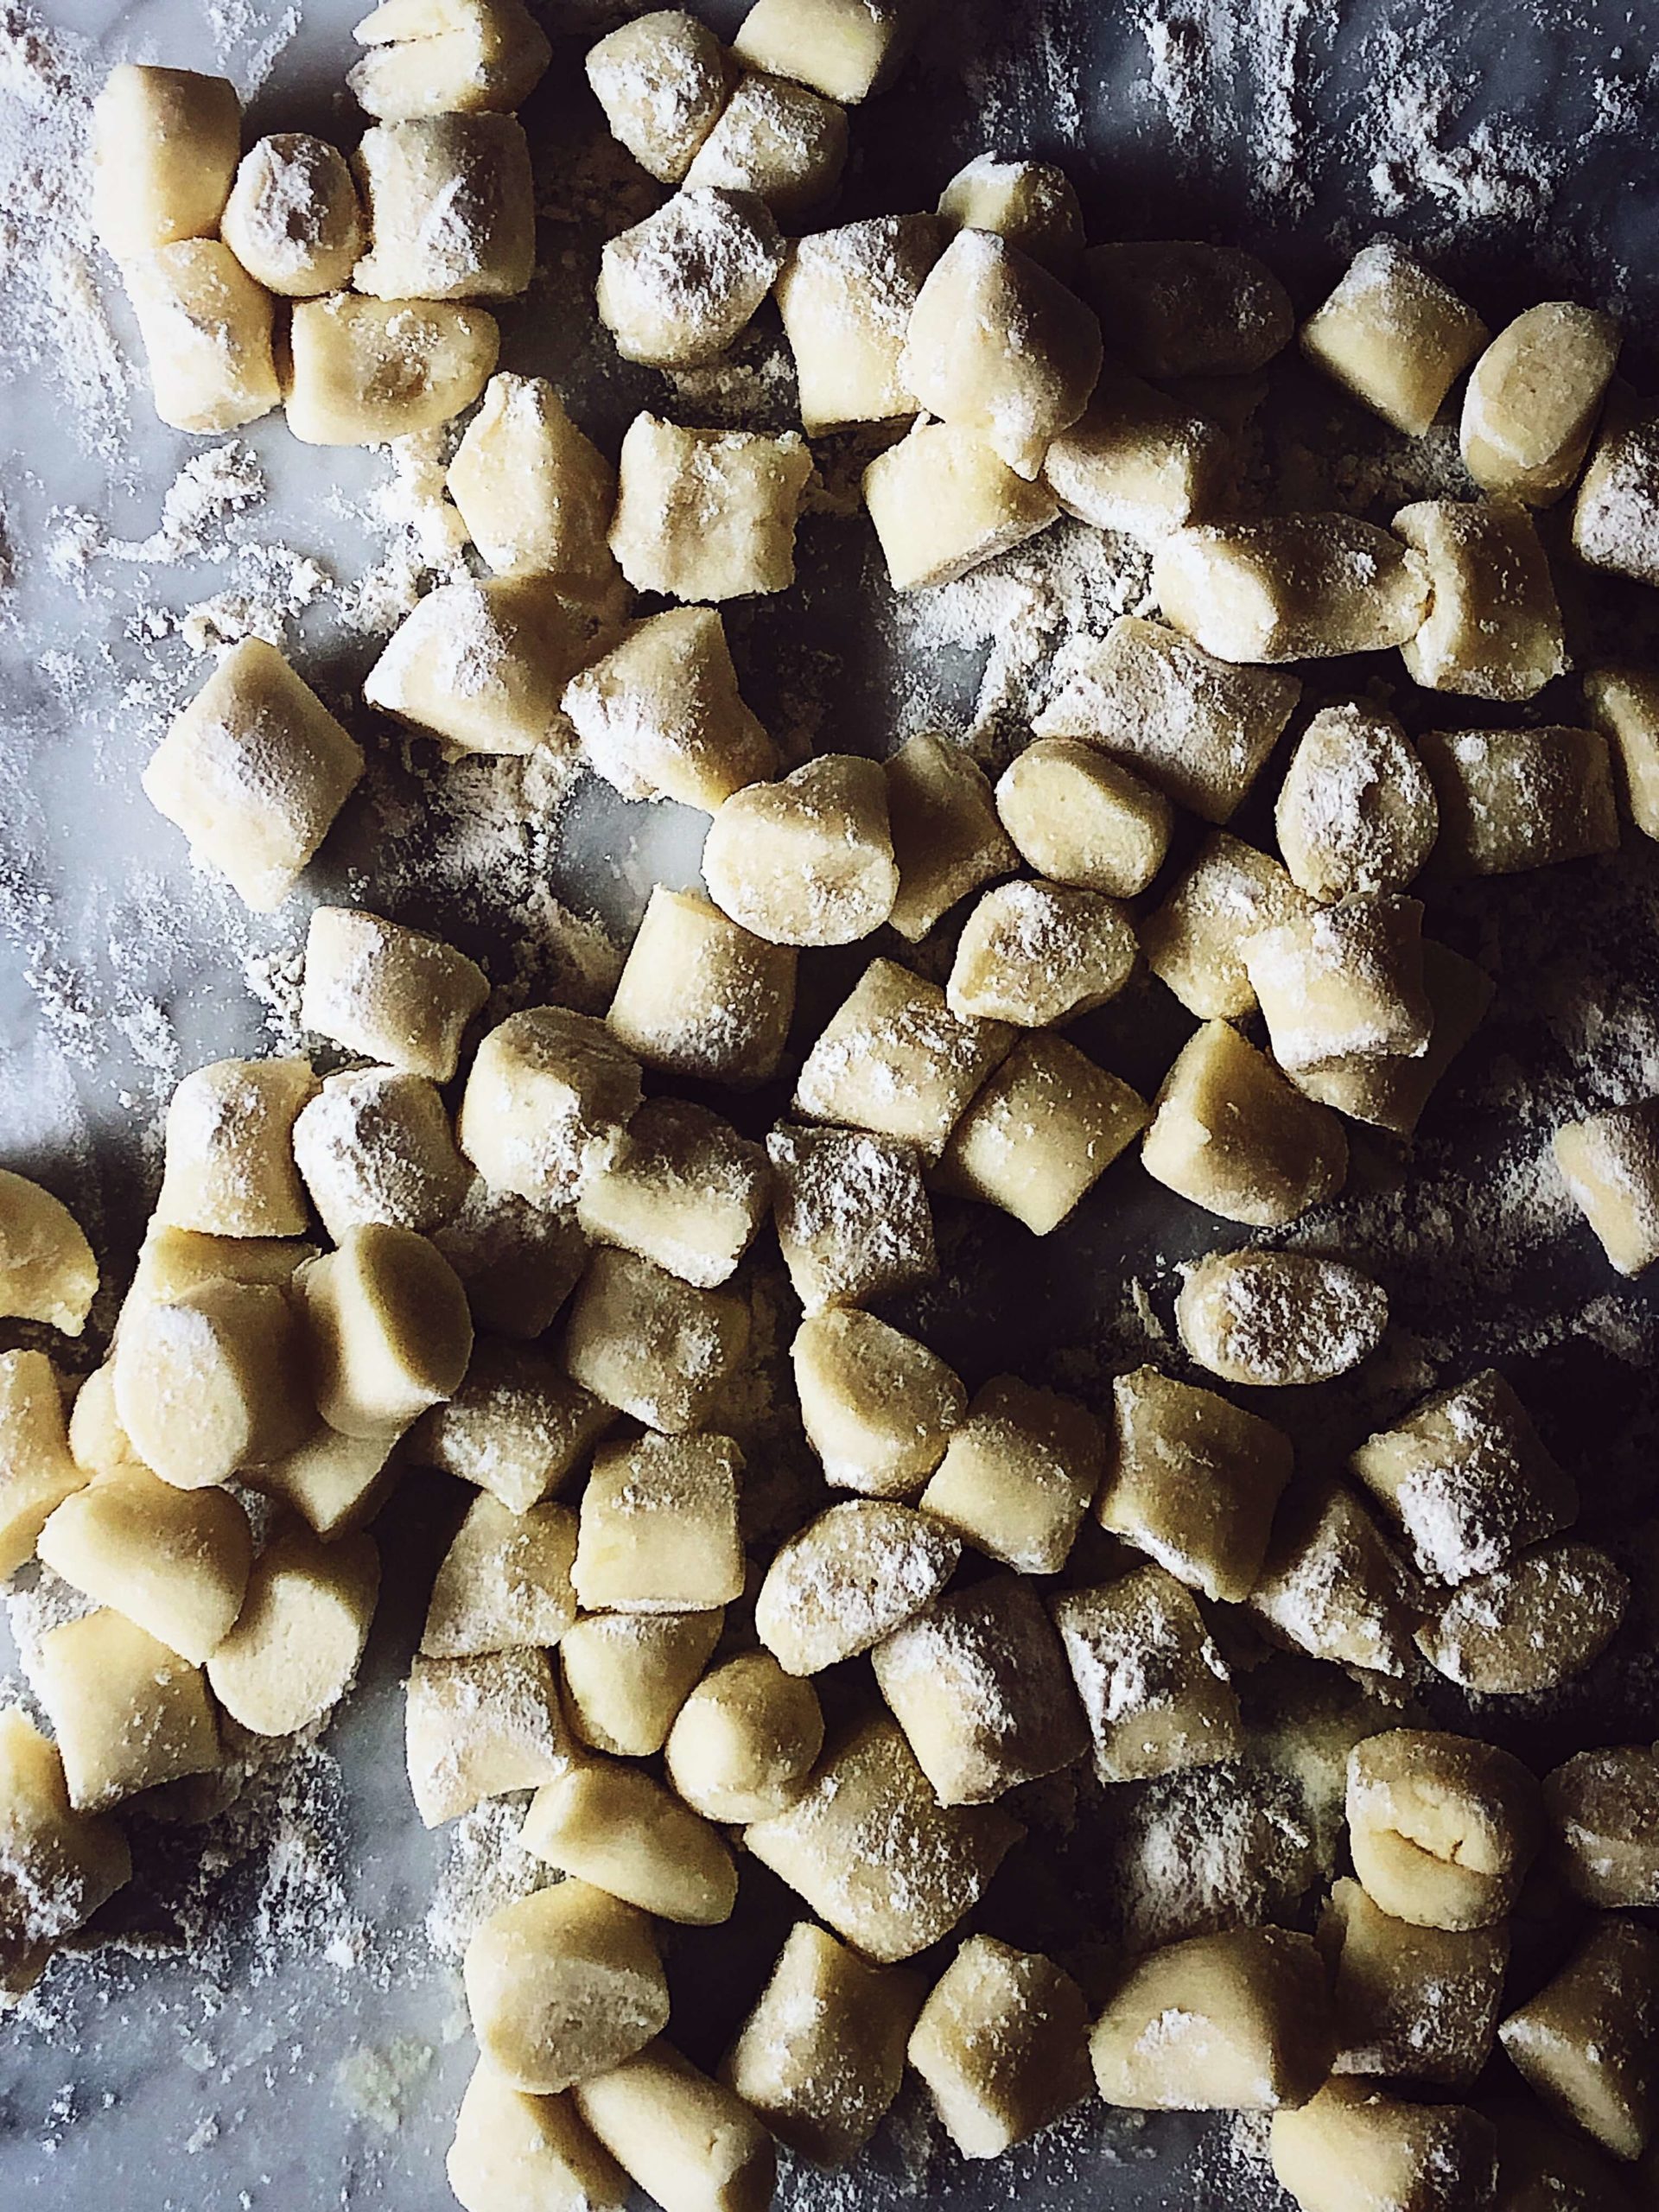 How to make authentic Italian gnocchi